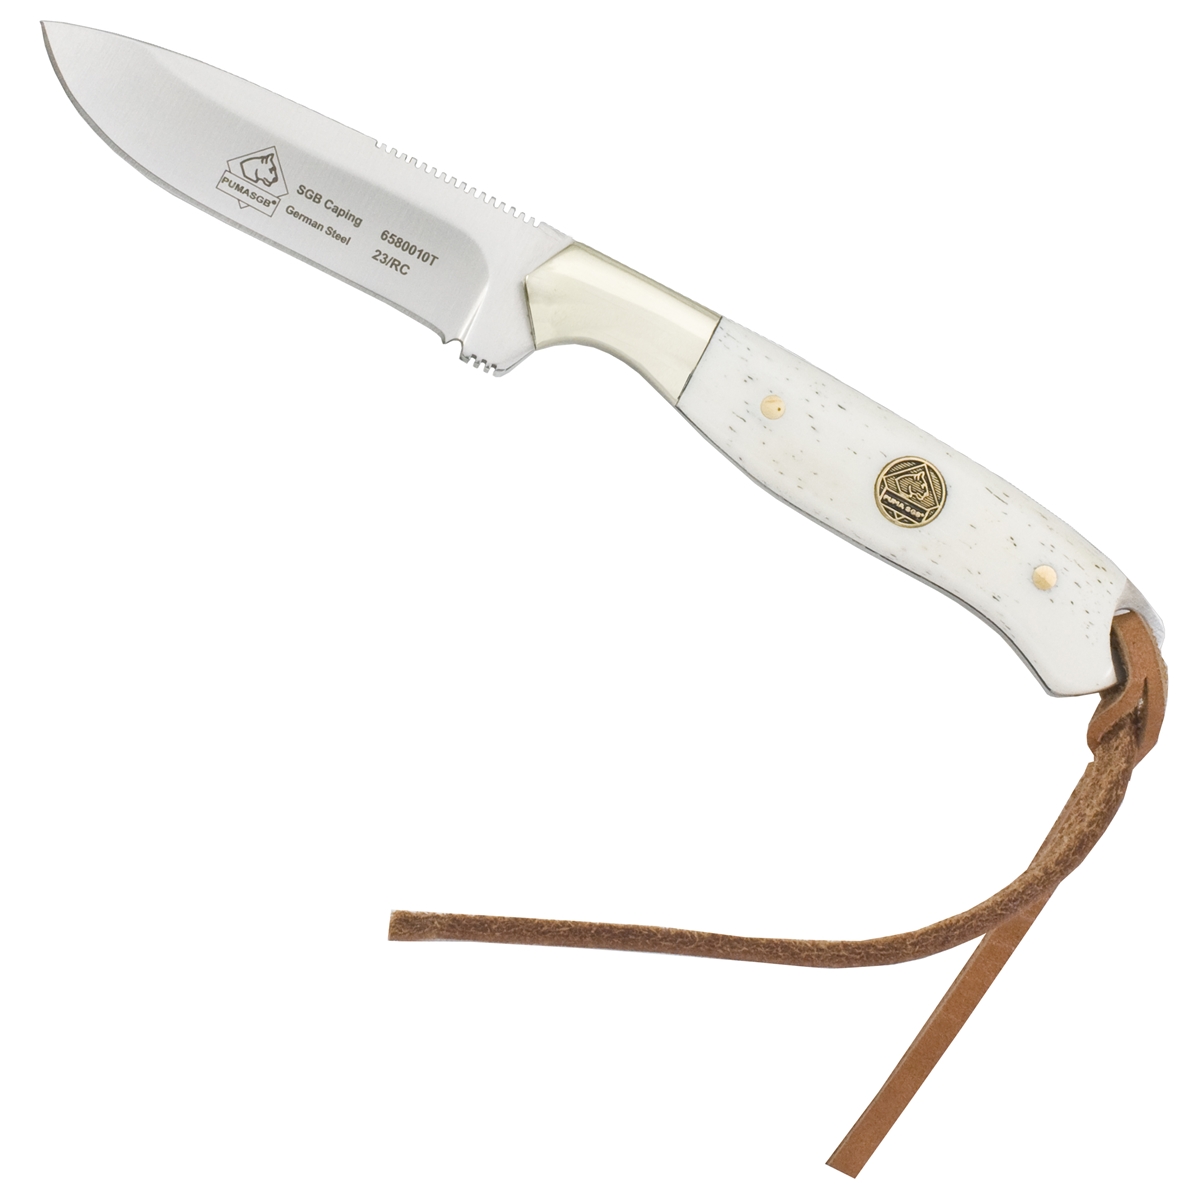 Puma SGB Caping Jacaranda Wood Knife with Leather Sheath